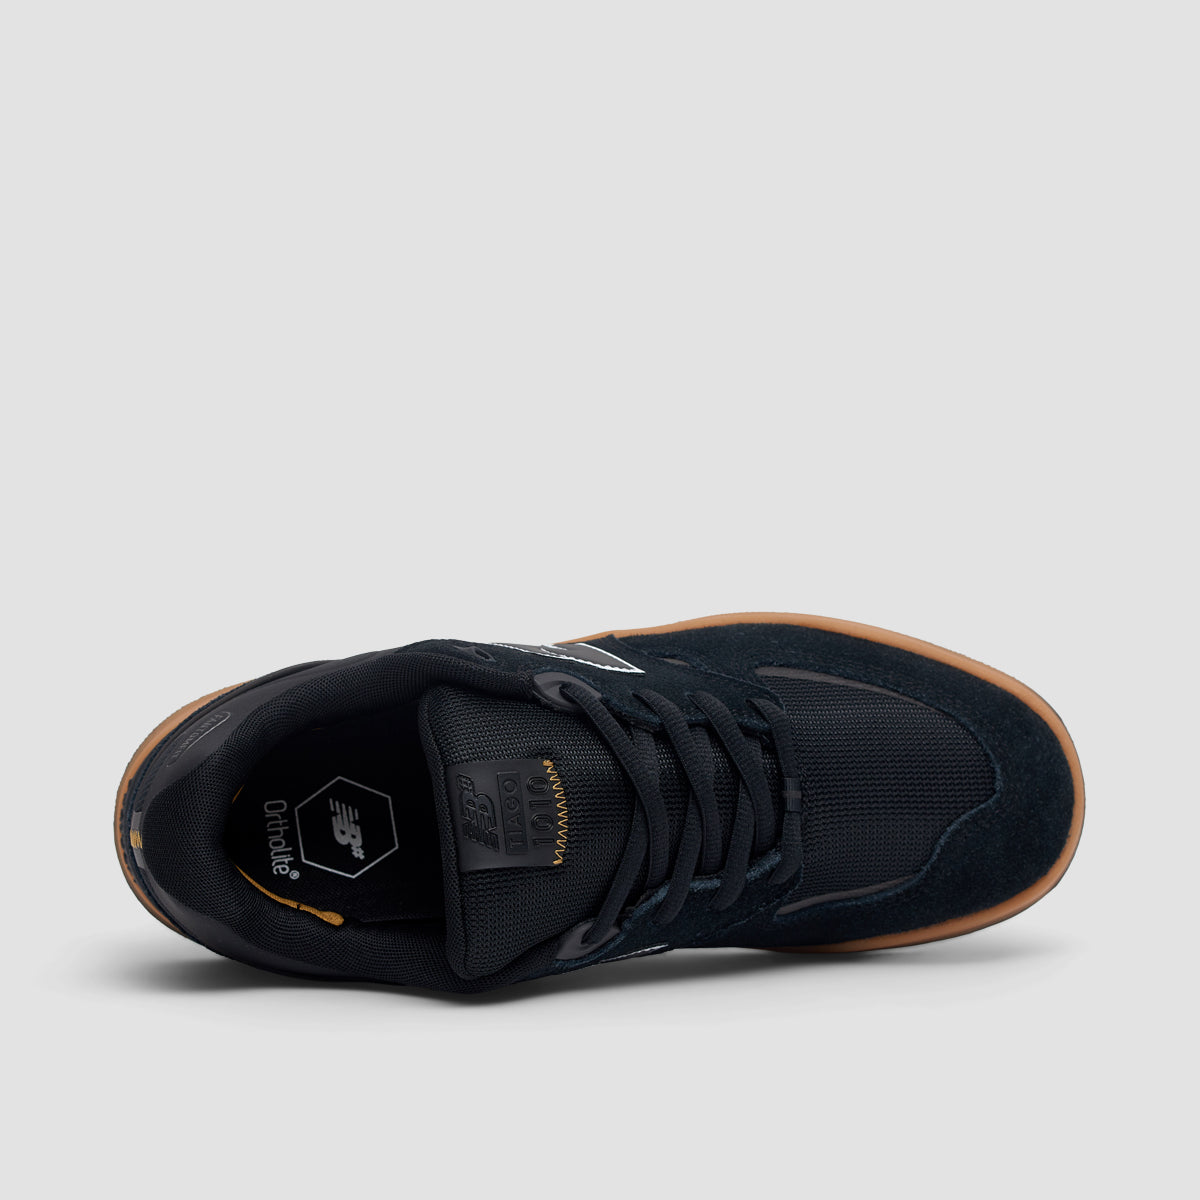 New Balance Numeric Tiago Lemos 1010 Shoes - Black/Gum